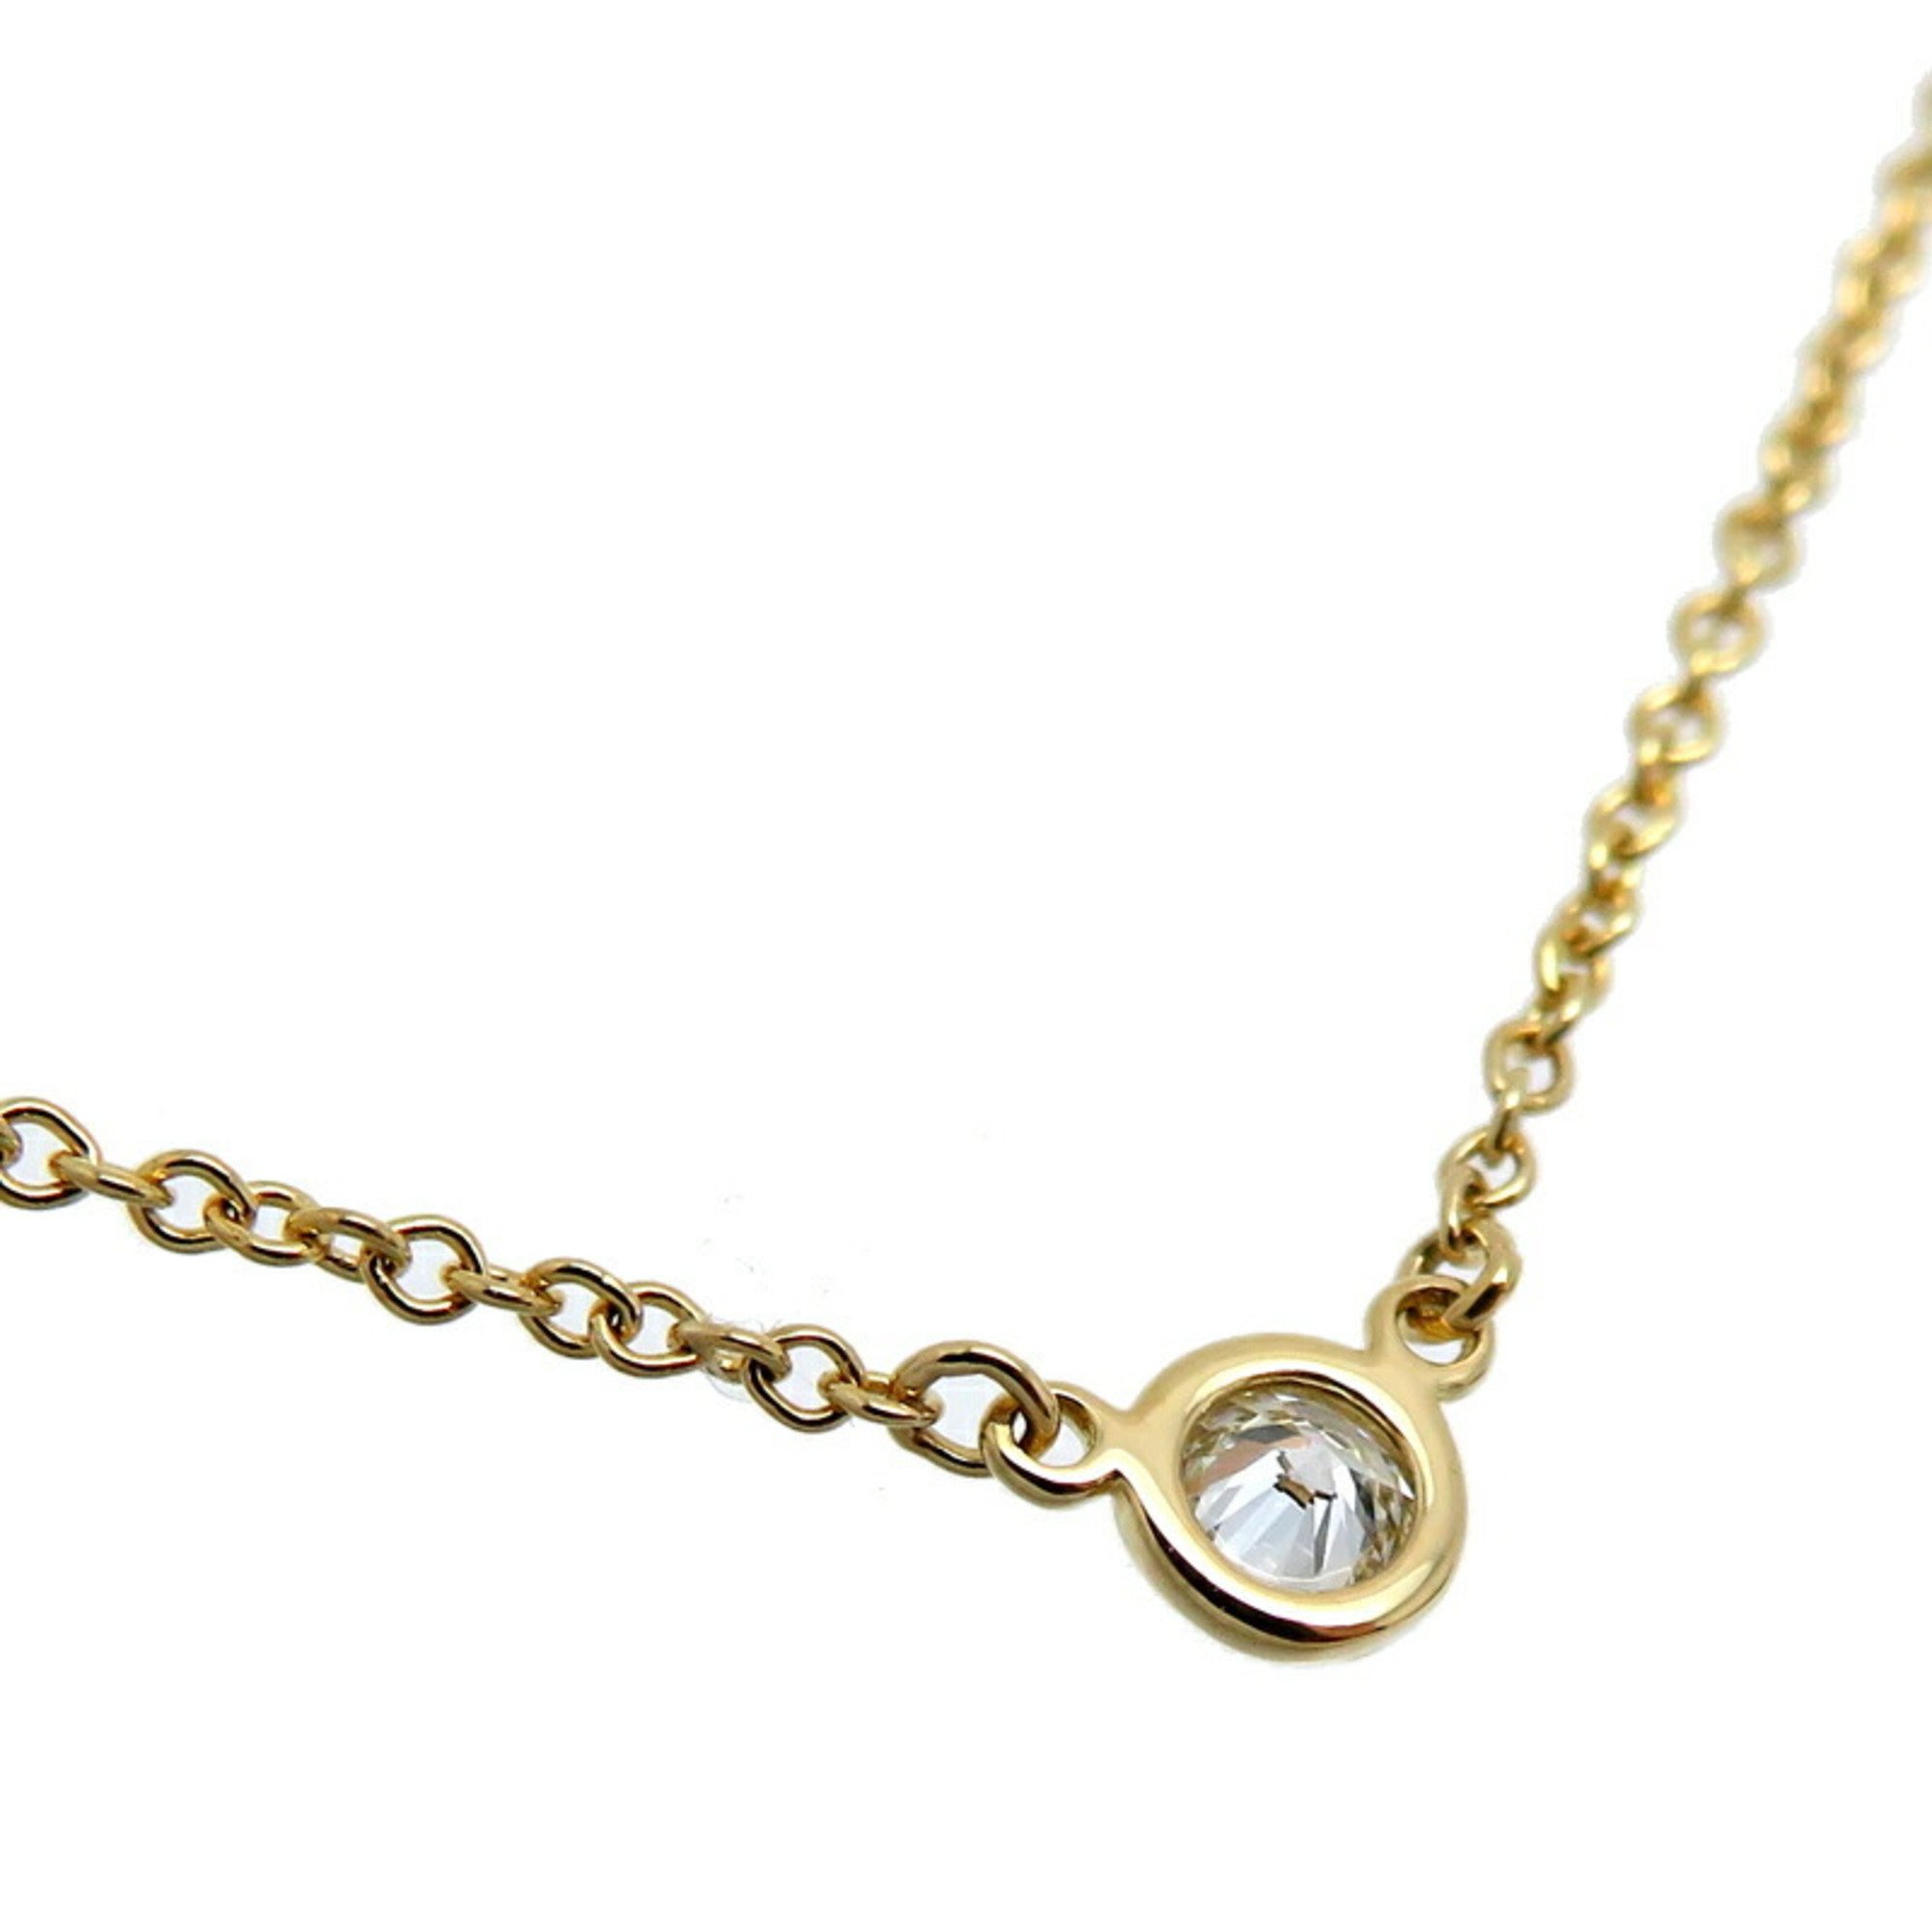 Tiffany Peretti By the Yard Diamond Women's Necklace 750 Yellow Gold